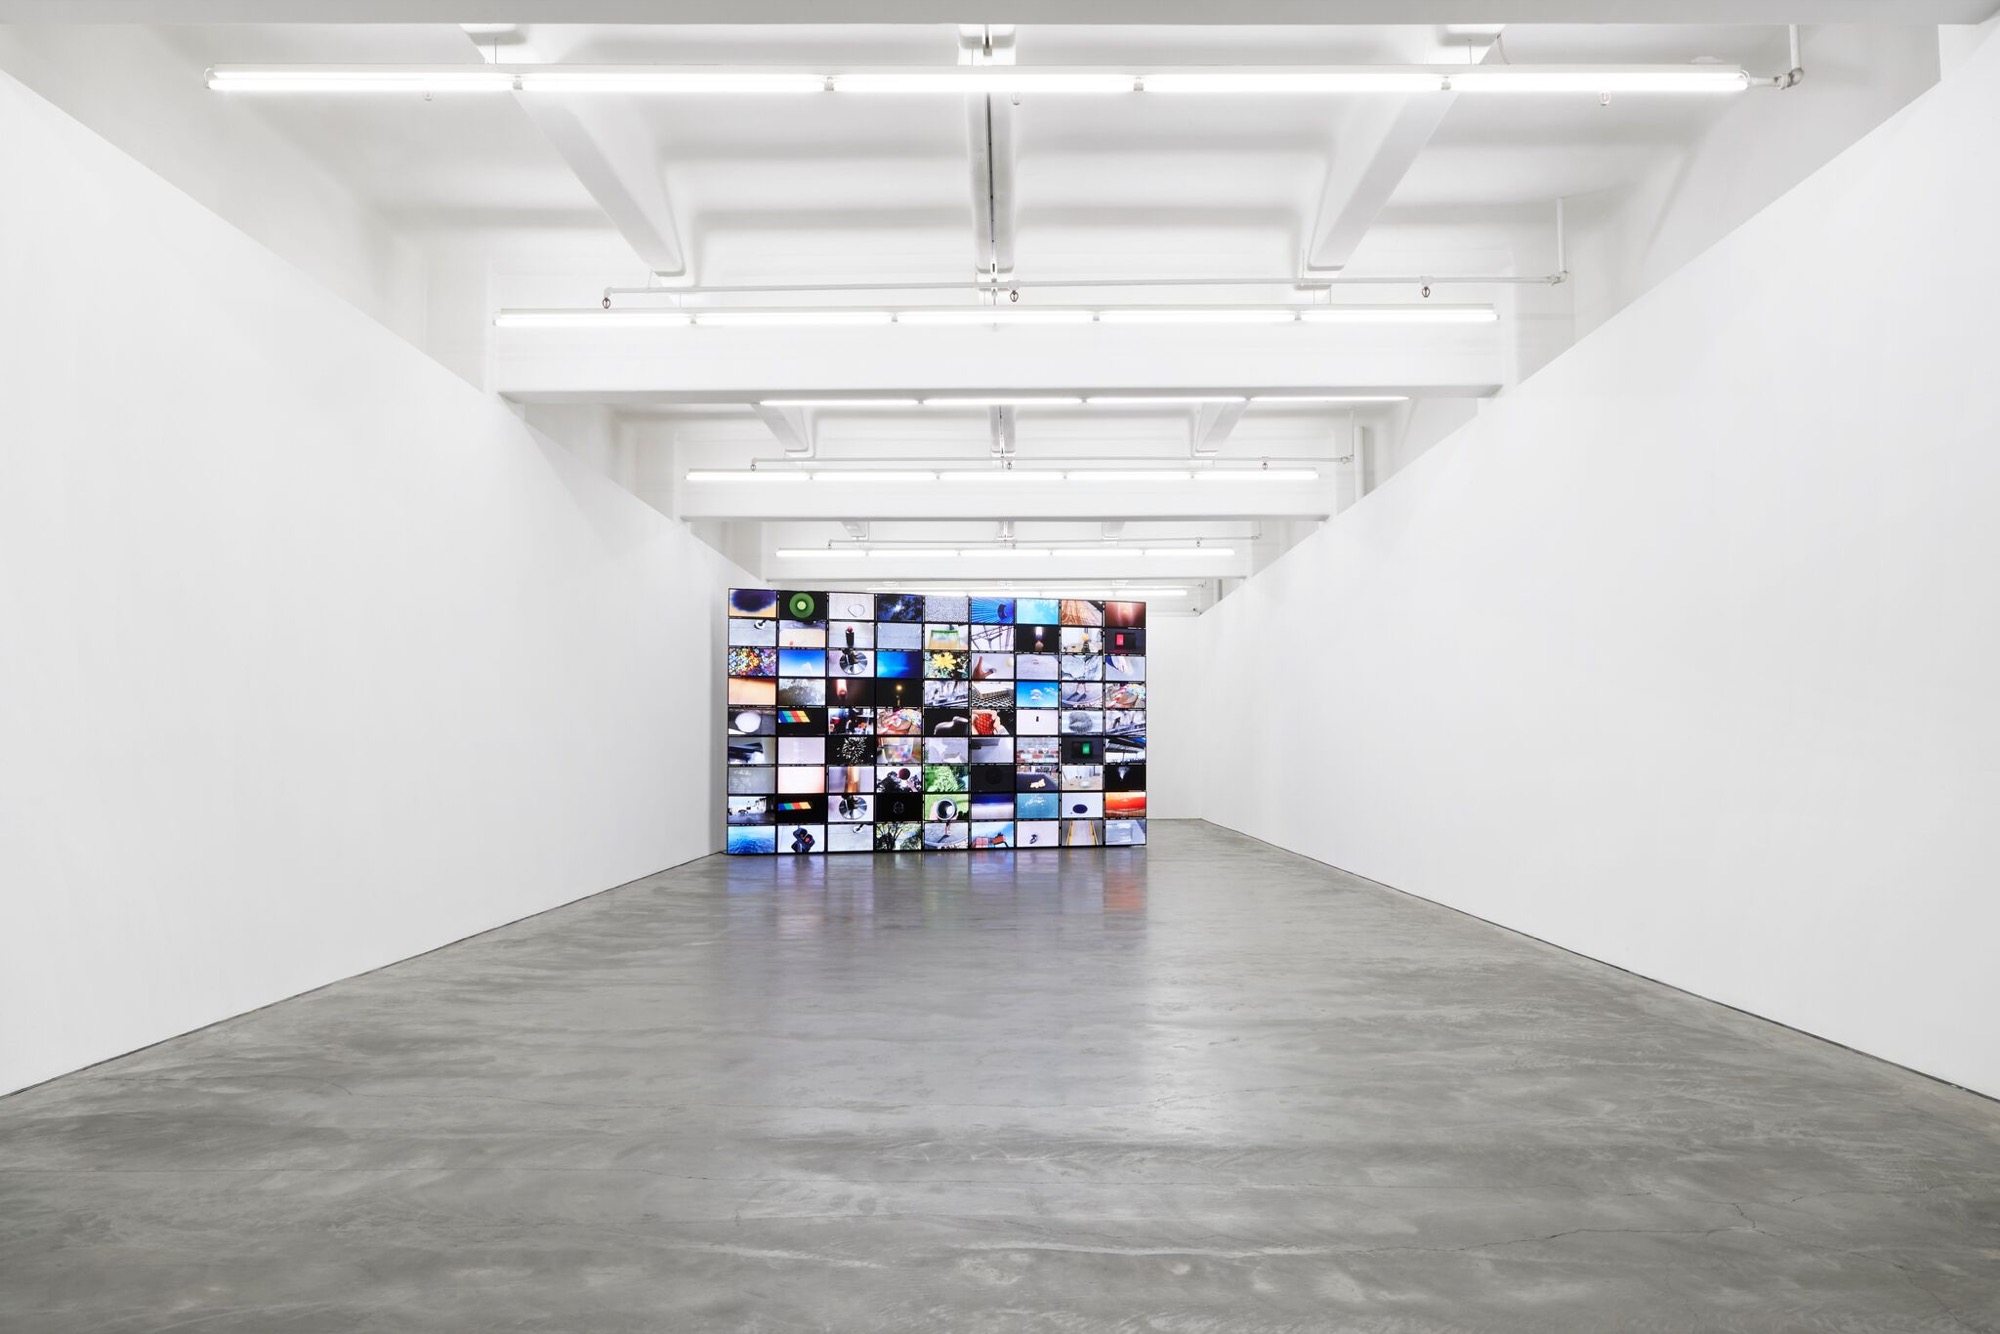 DANIEL VON STURMER, <em>CATARACT</em>, 2019,81 screen installation, 300 x 510 x 40 cm. Image courtesy the artist and Anna Schwartz Gallery. Photograph: Zan Wimberley.